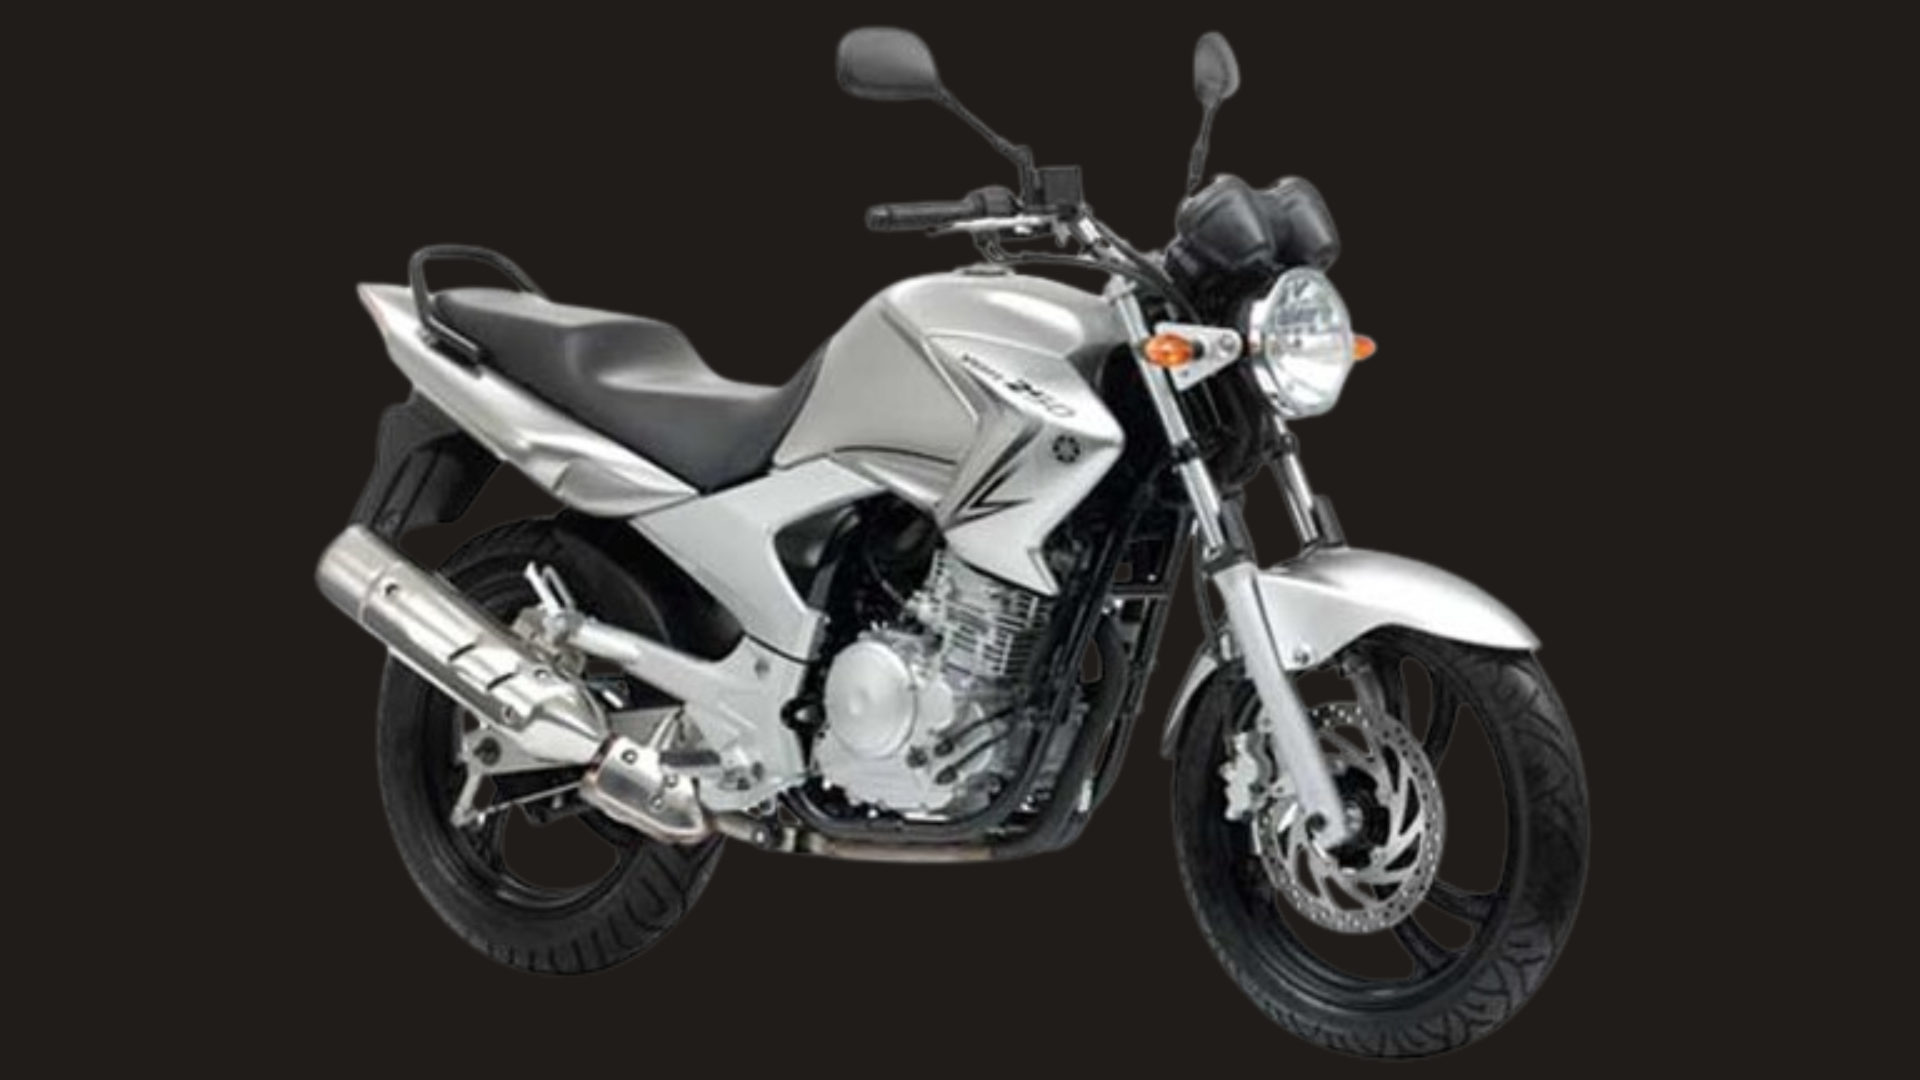 yamaha fazer 250 2009 - motos até R$ 10 mil